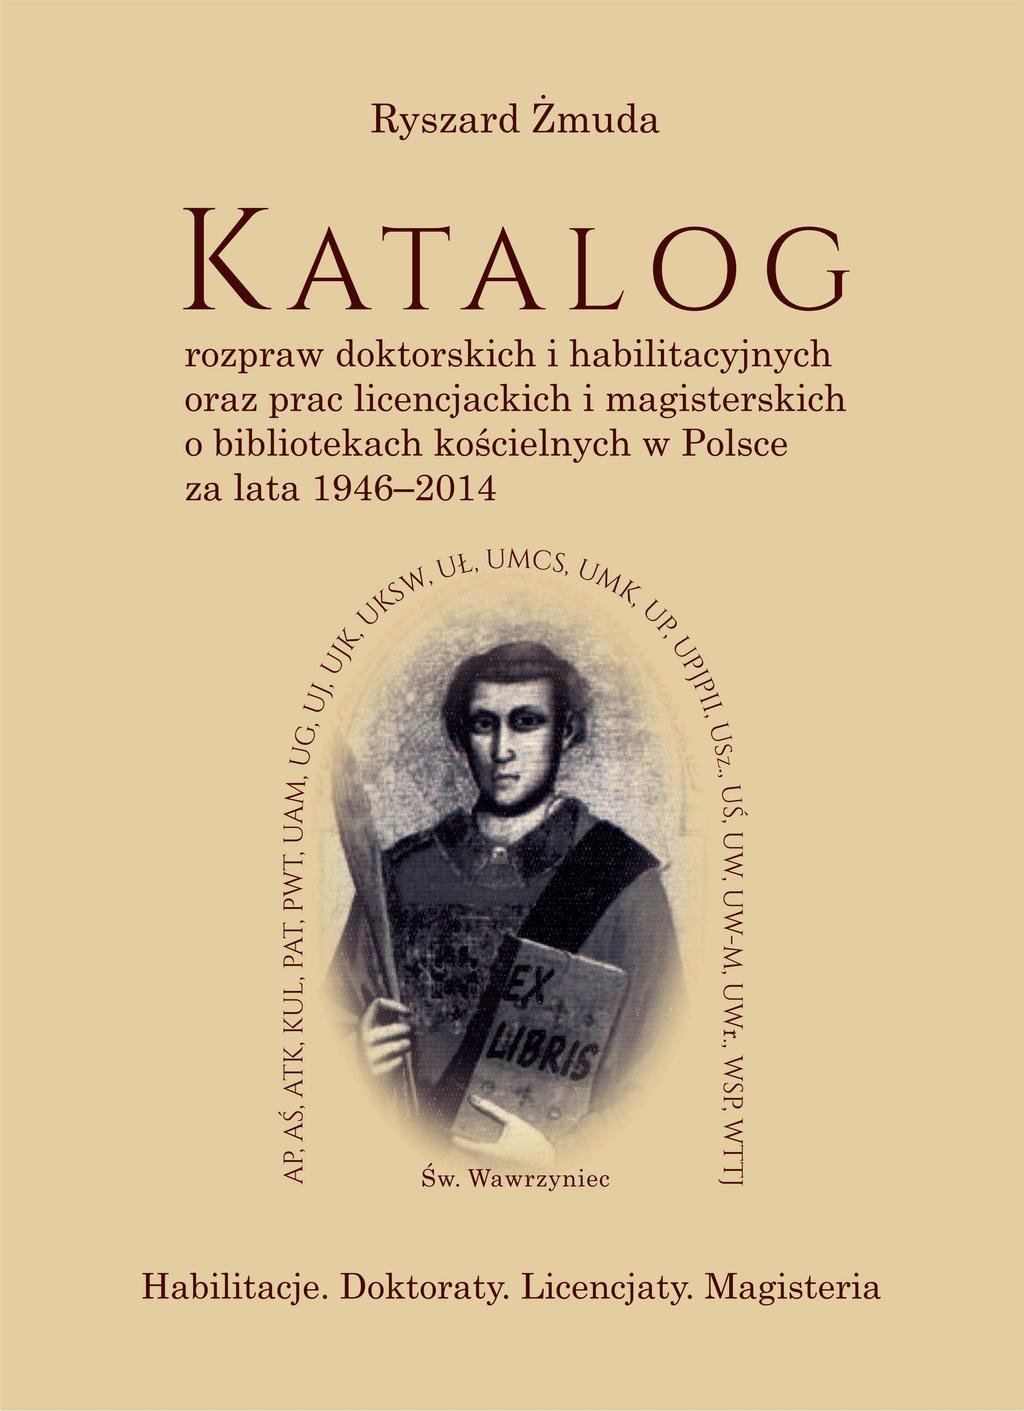 Bibliografia + Katalog = Dokumentacja http://digital.fides.org.